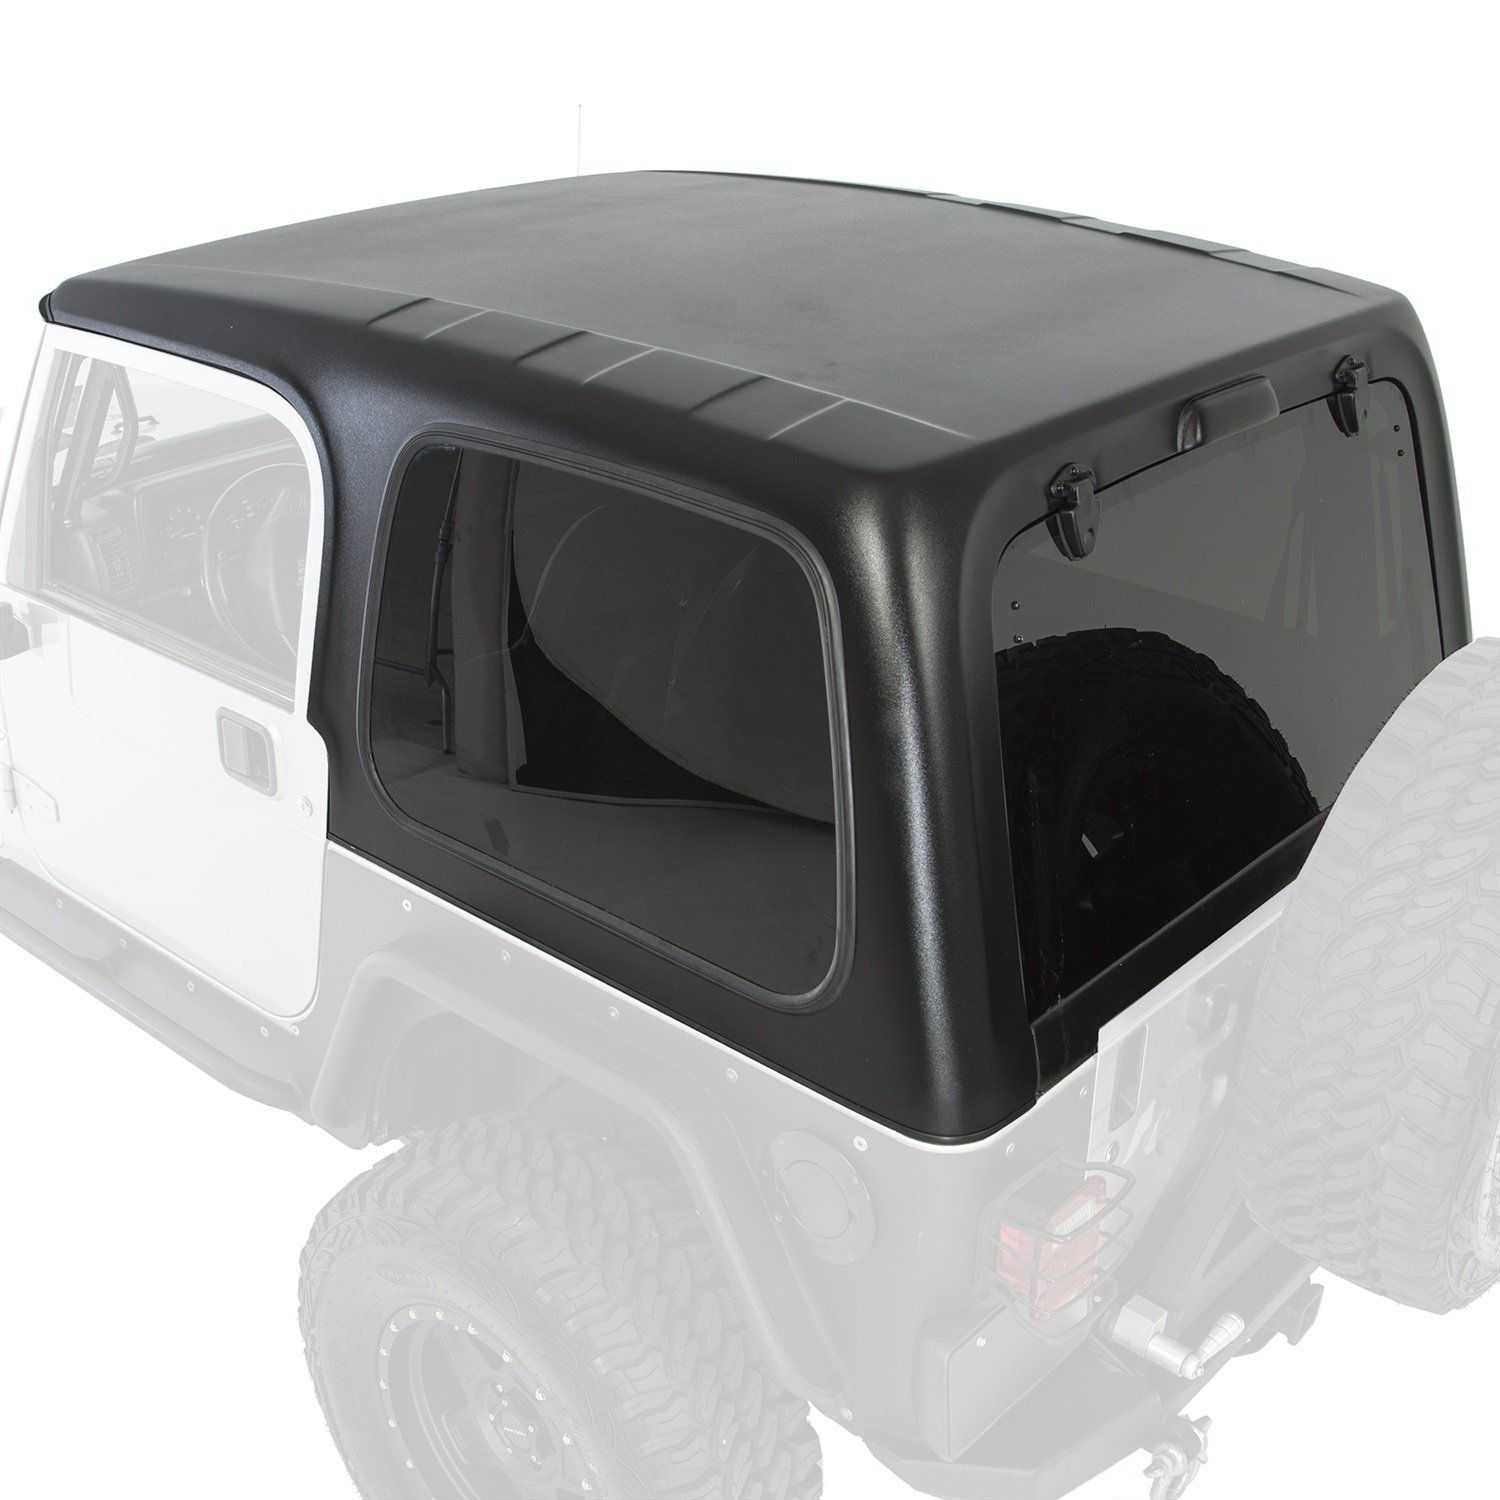 Smittybilt Hardtop for Wrangler TJ - Jeep Wrangler Parts